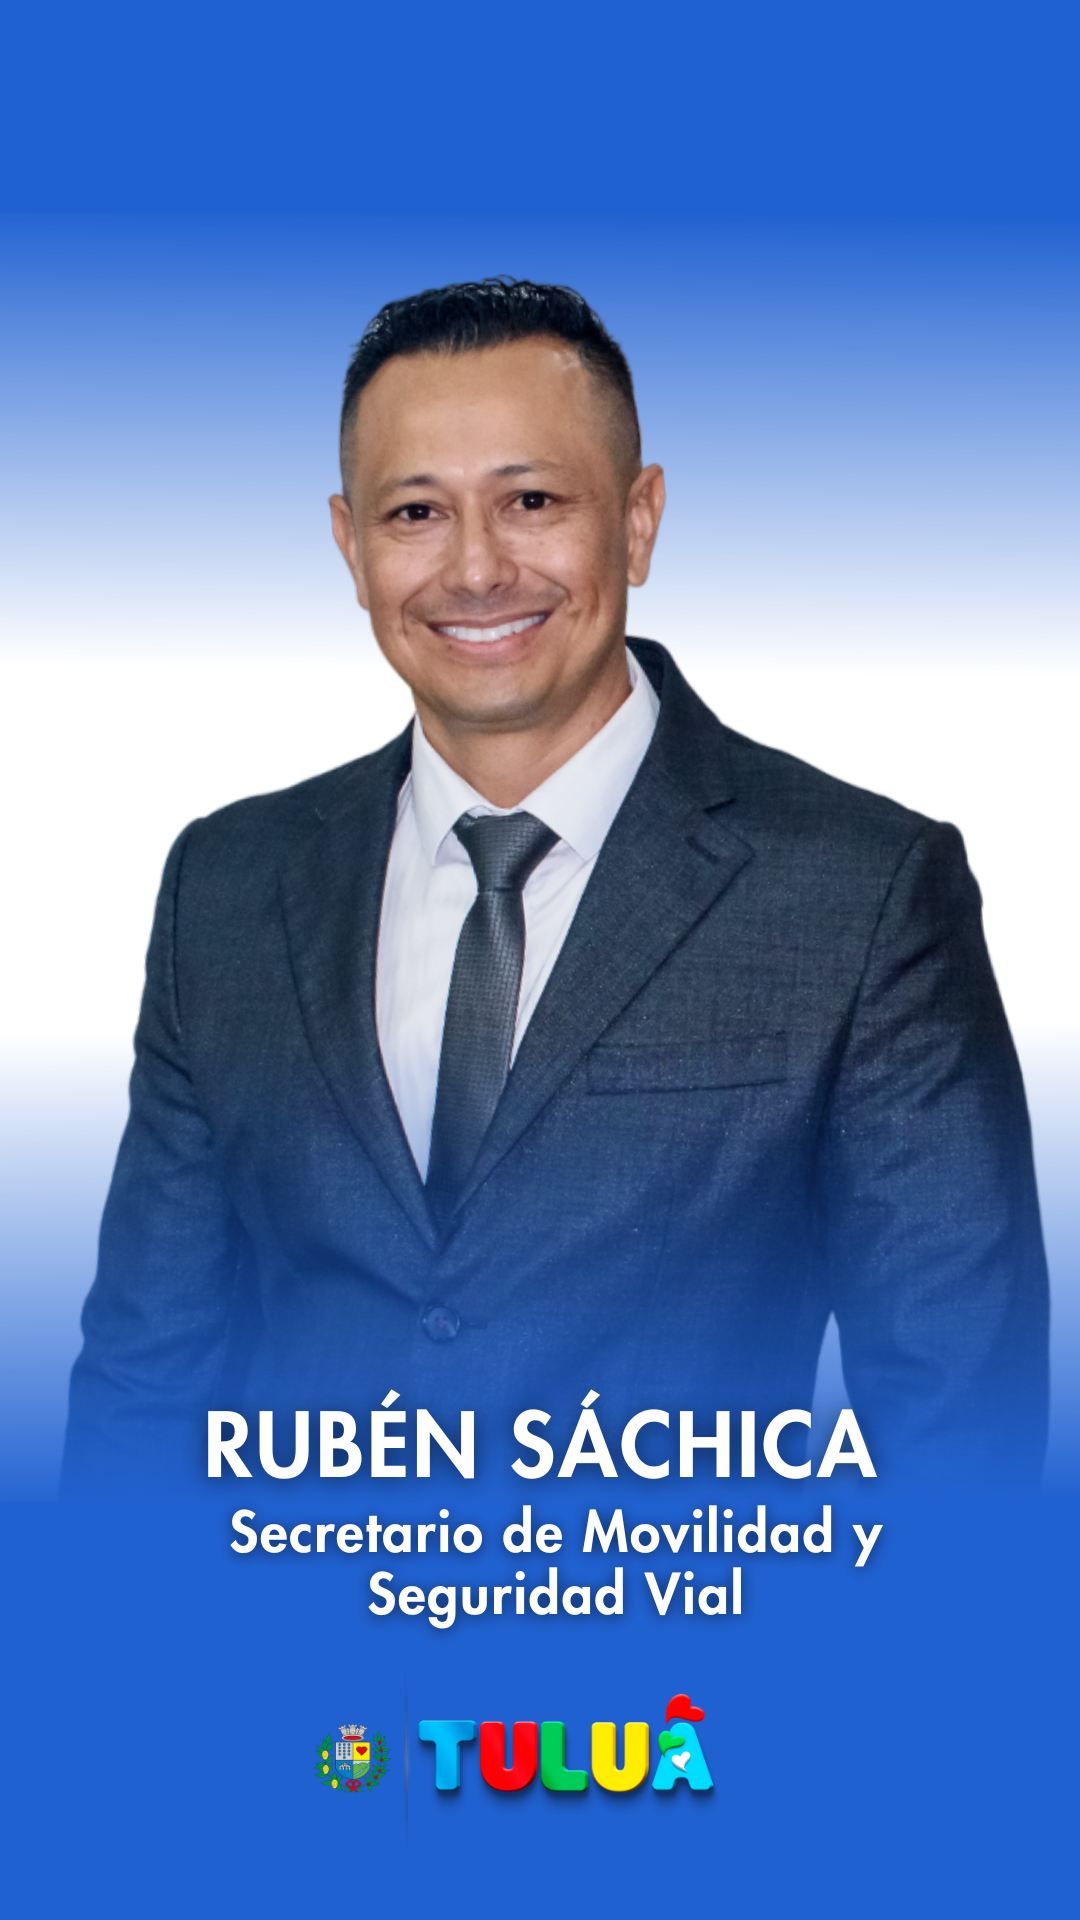 Rubén Sáchica